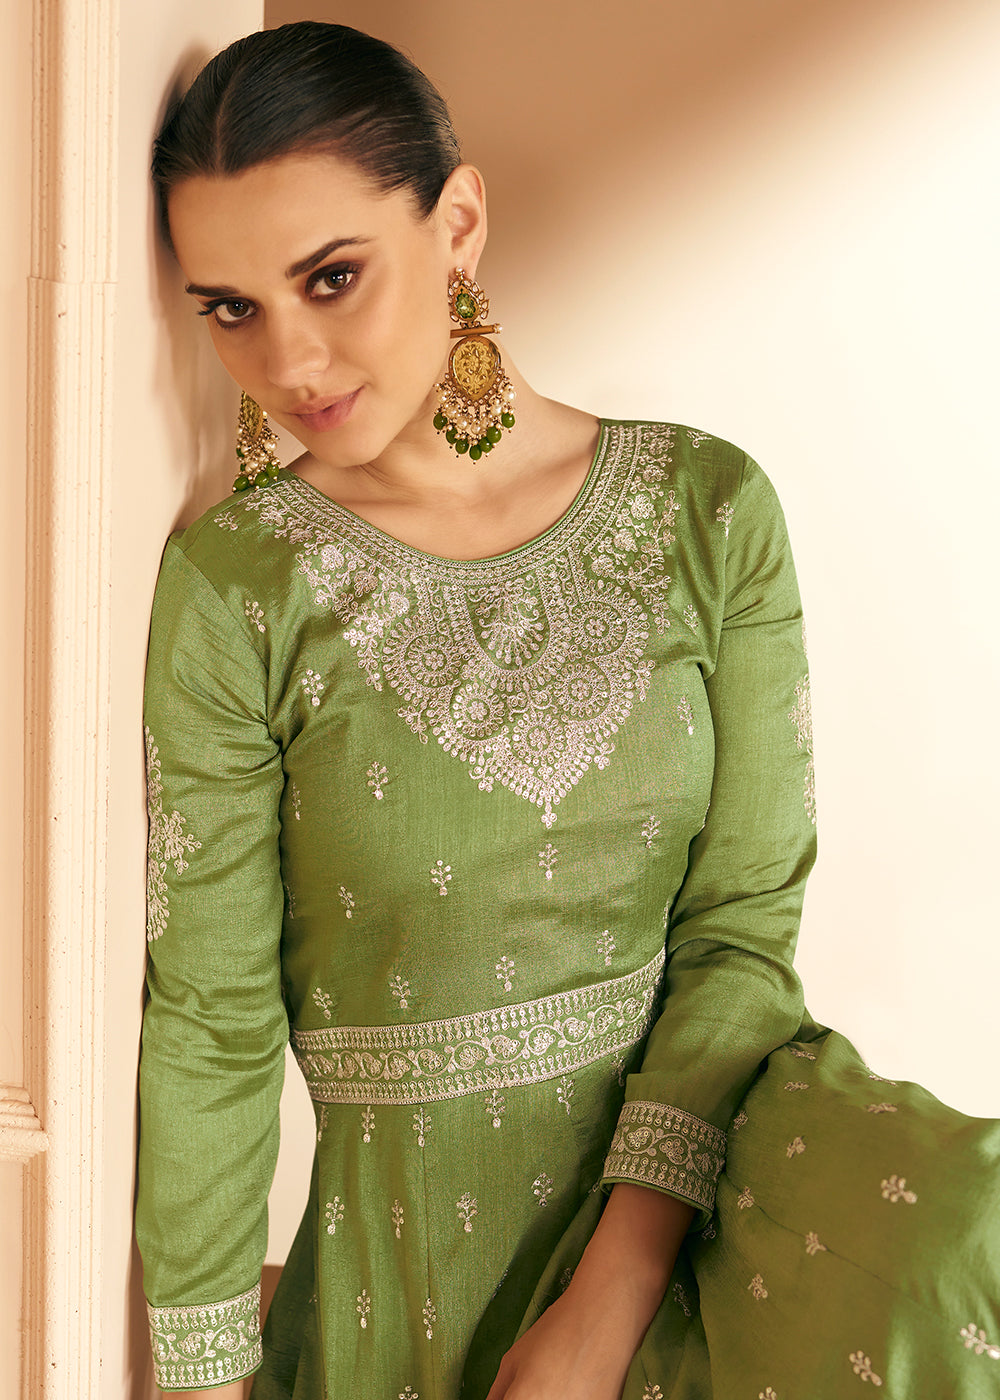 Buy Now Embroidered Green Premium Silk Mehndi Wear Anarkali Suit Online in USA, UK, Australia, New Zealand, Canada & Worldwide at Empress Clothing.